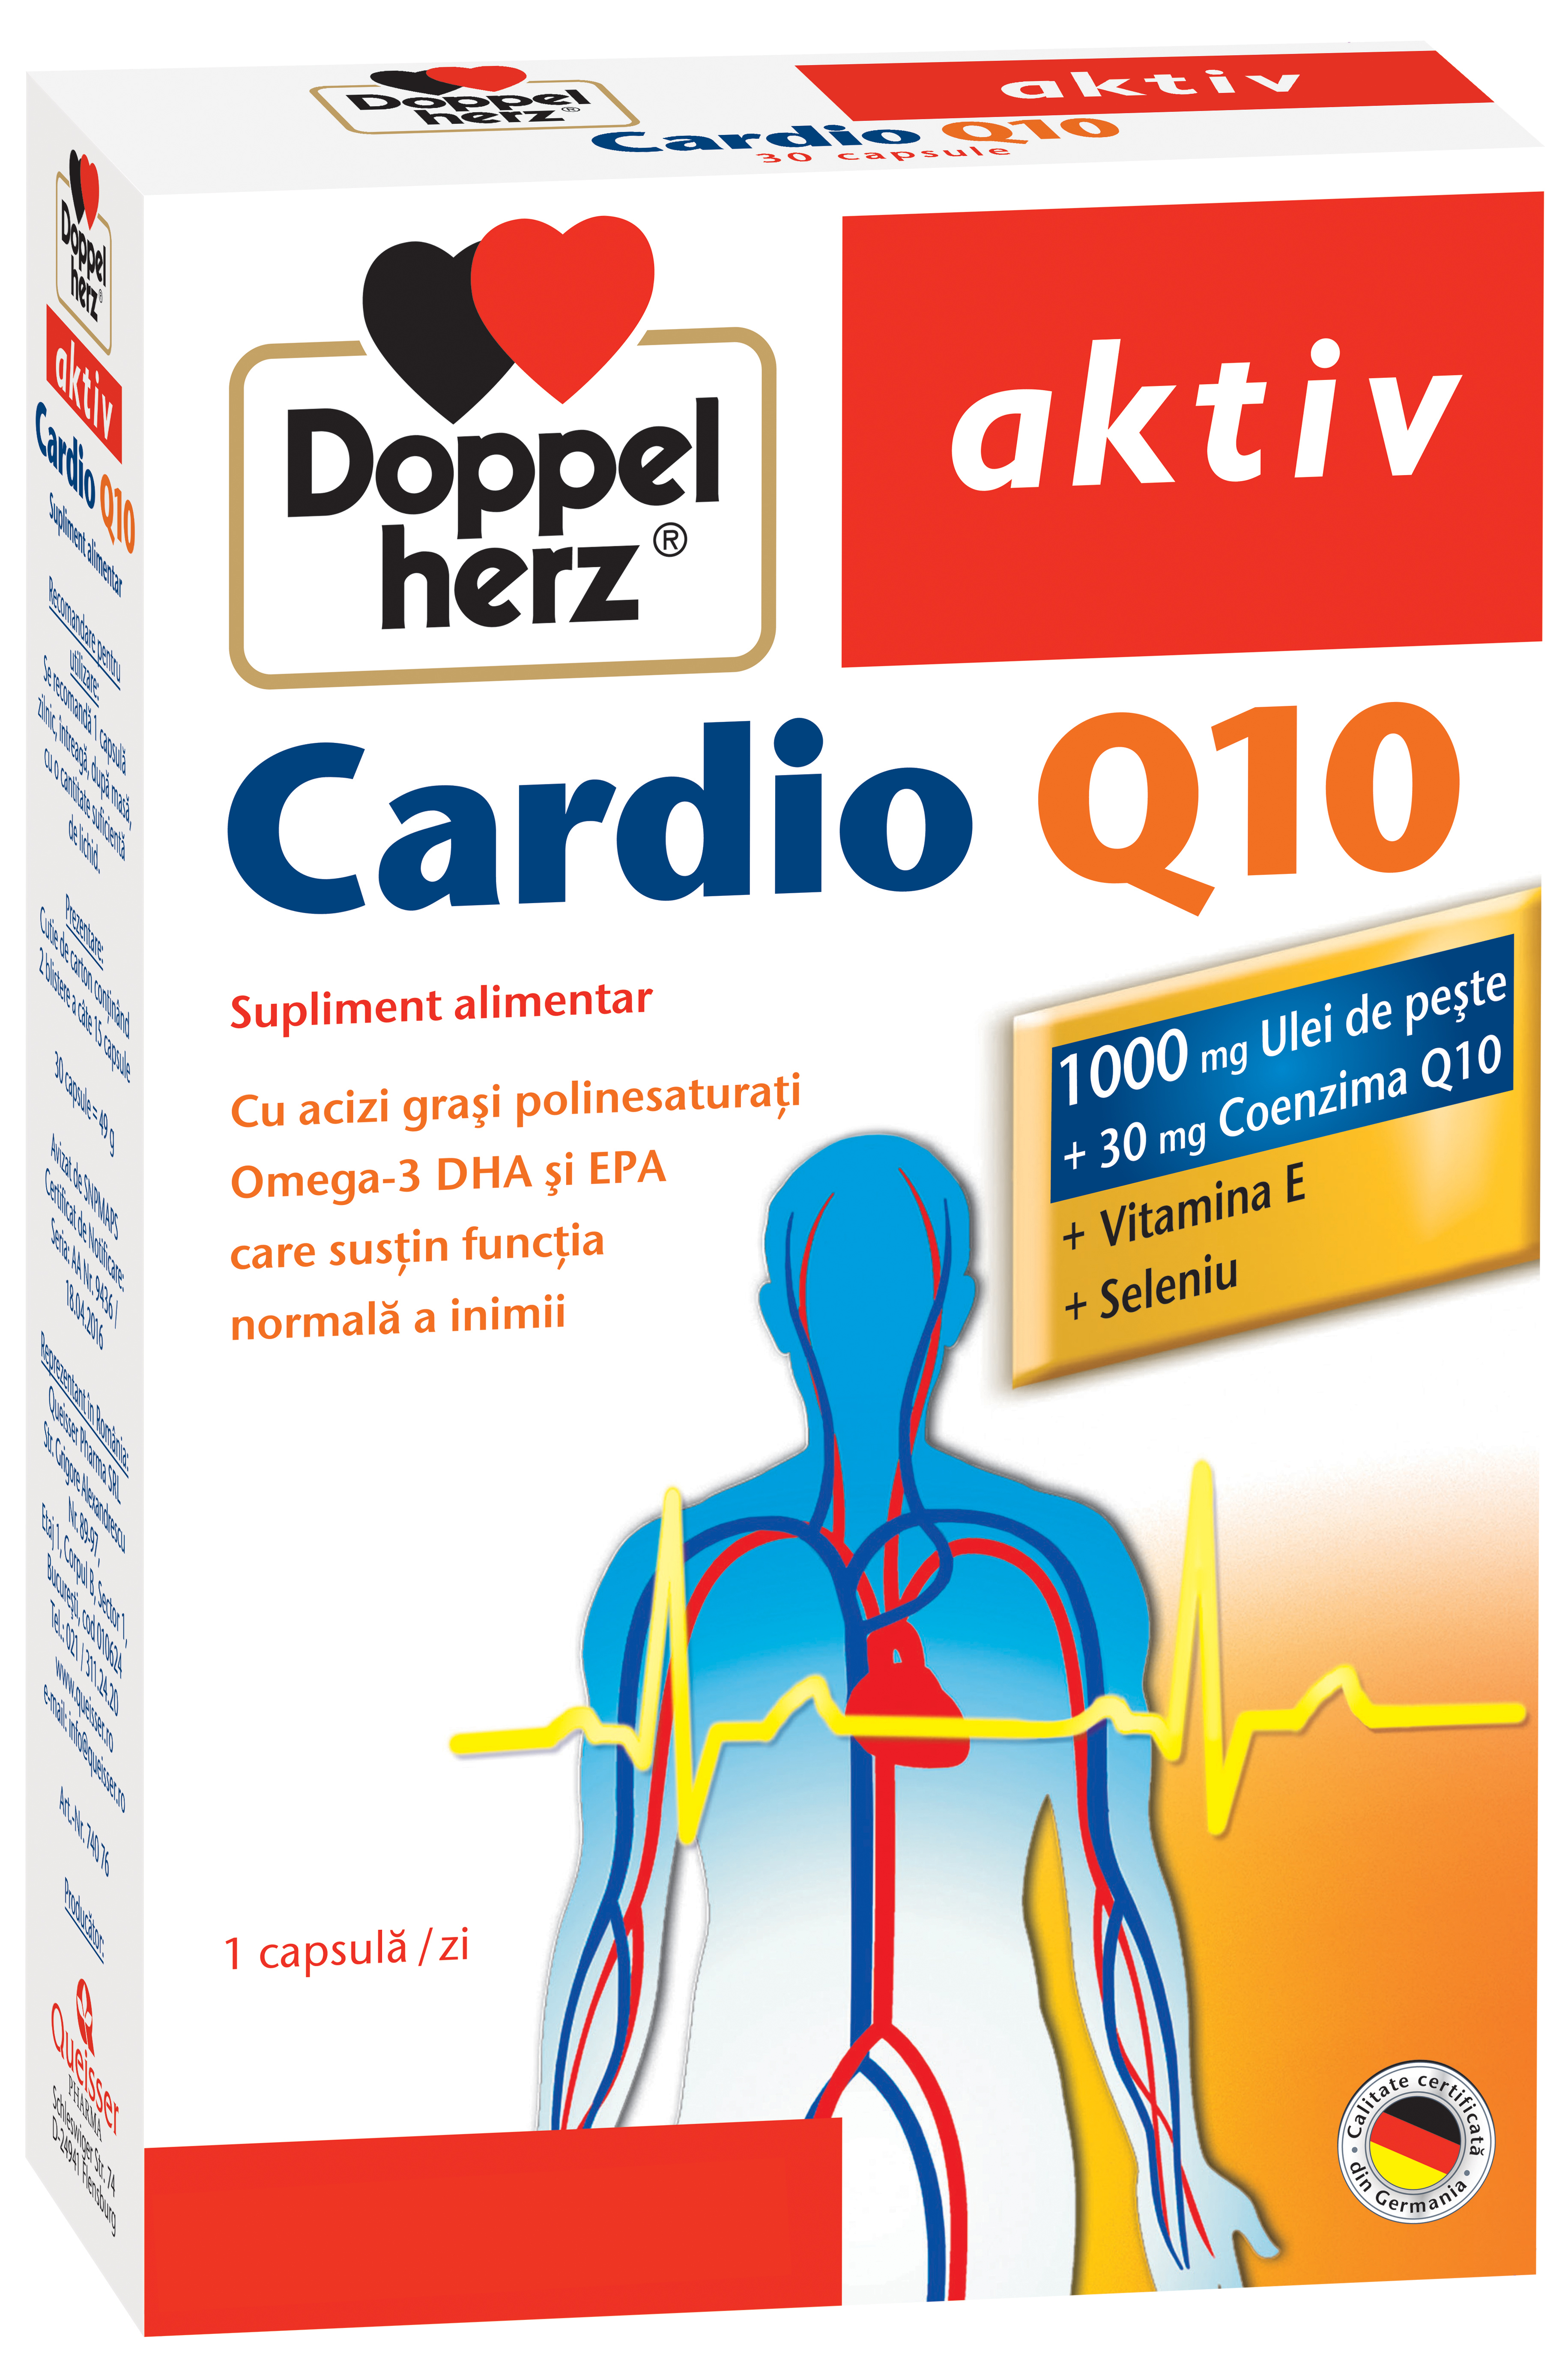 Cardiologie - Doppelherz aktiv cardio Q10 x 30 capsule, medik-on.ro